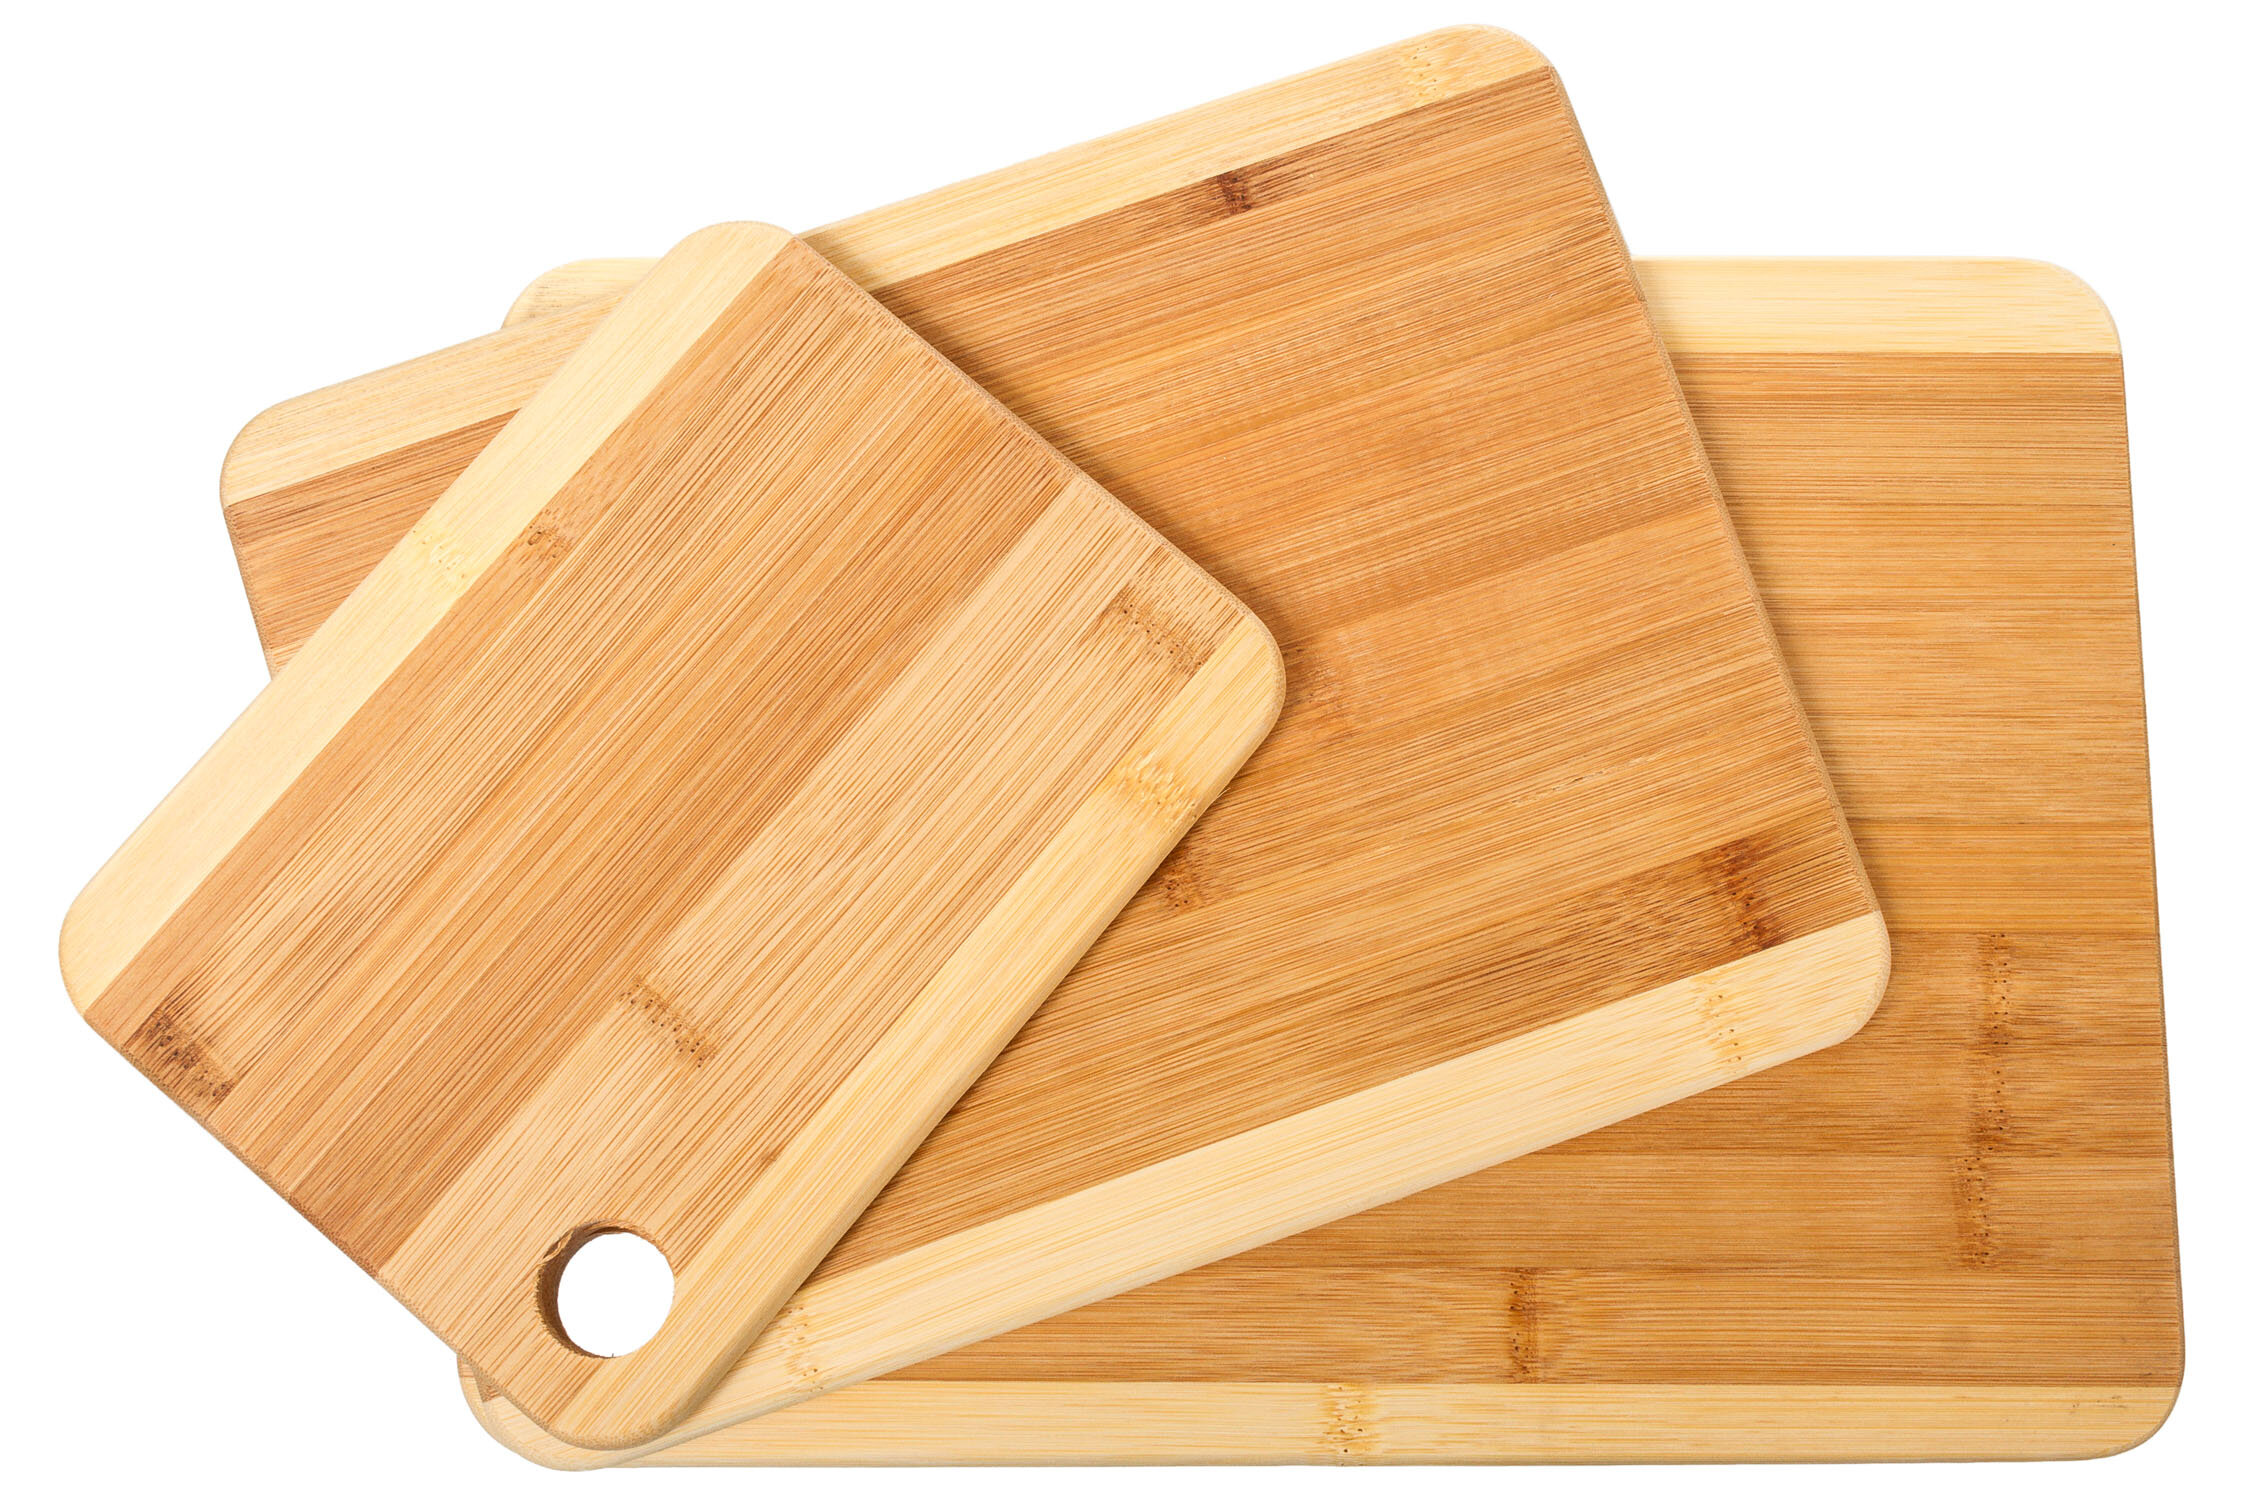 cutting board set